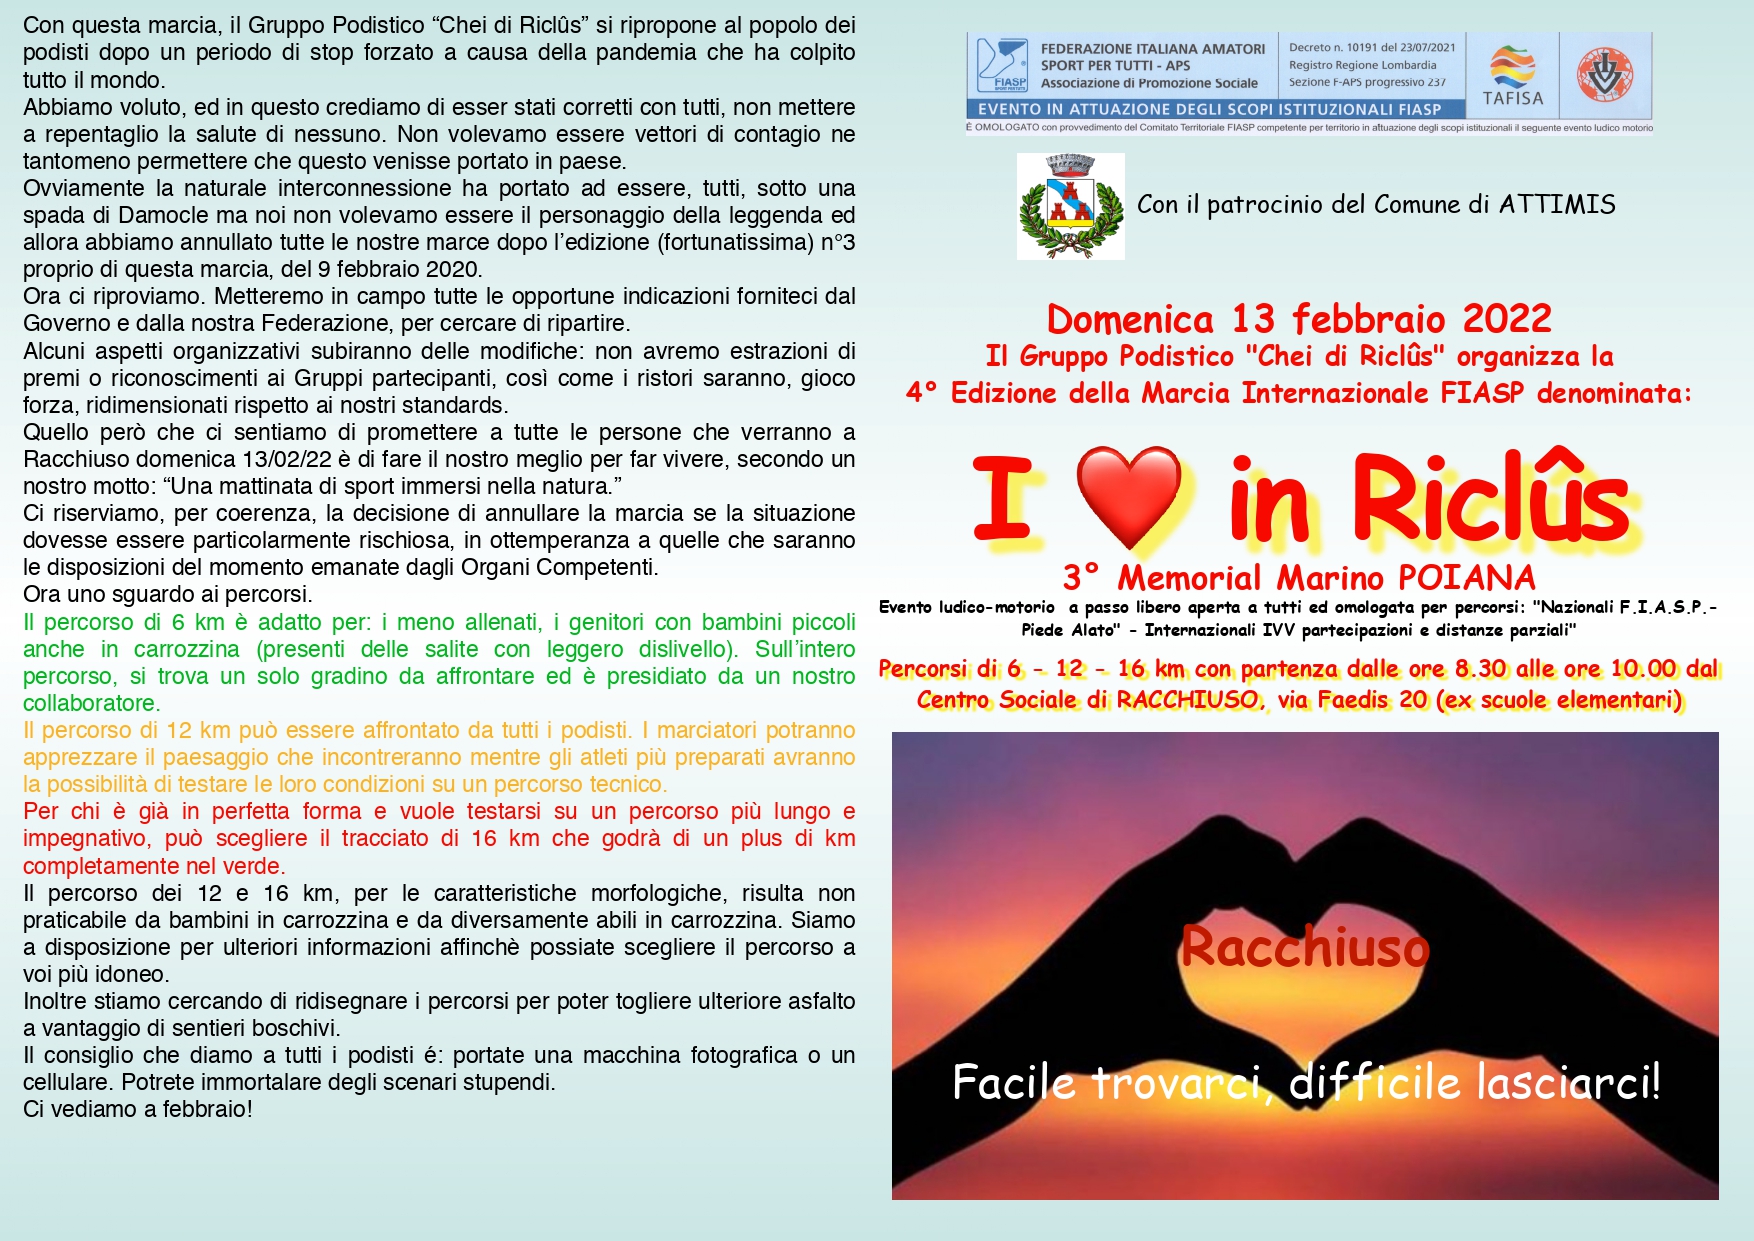 i_love_riclus_page-0001.jpg